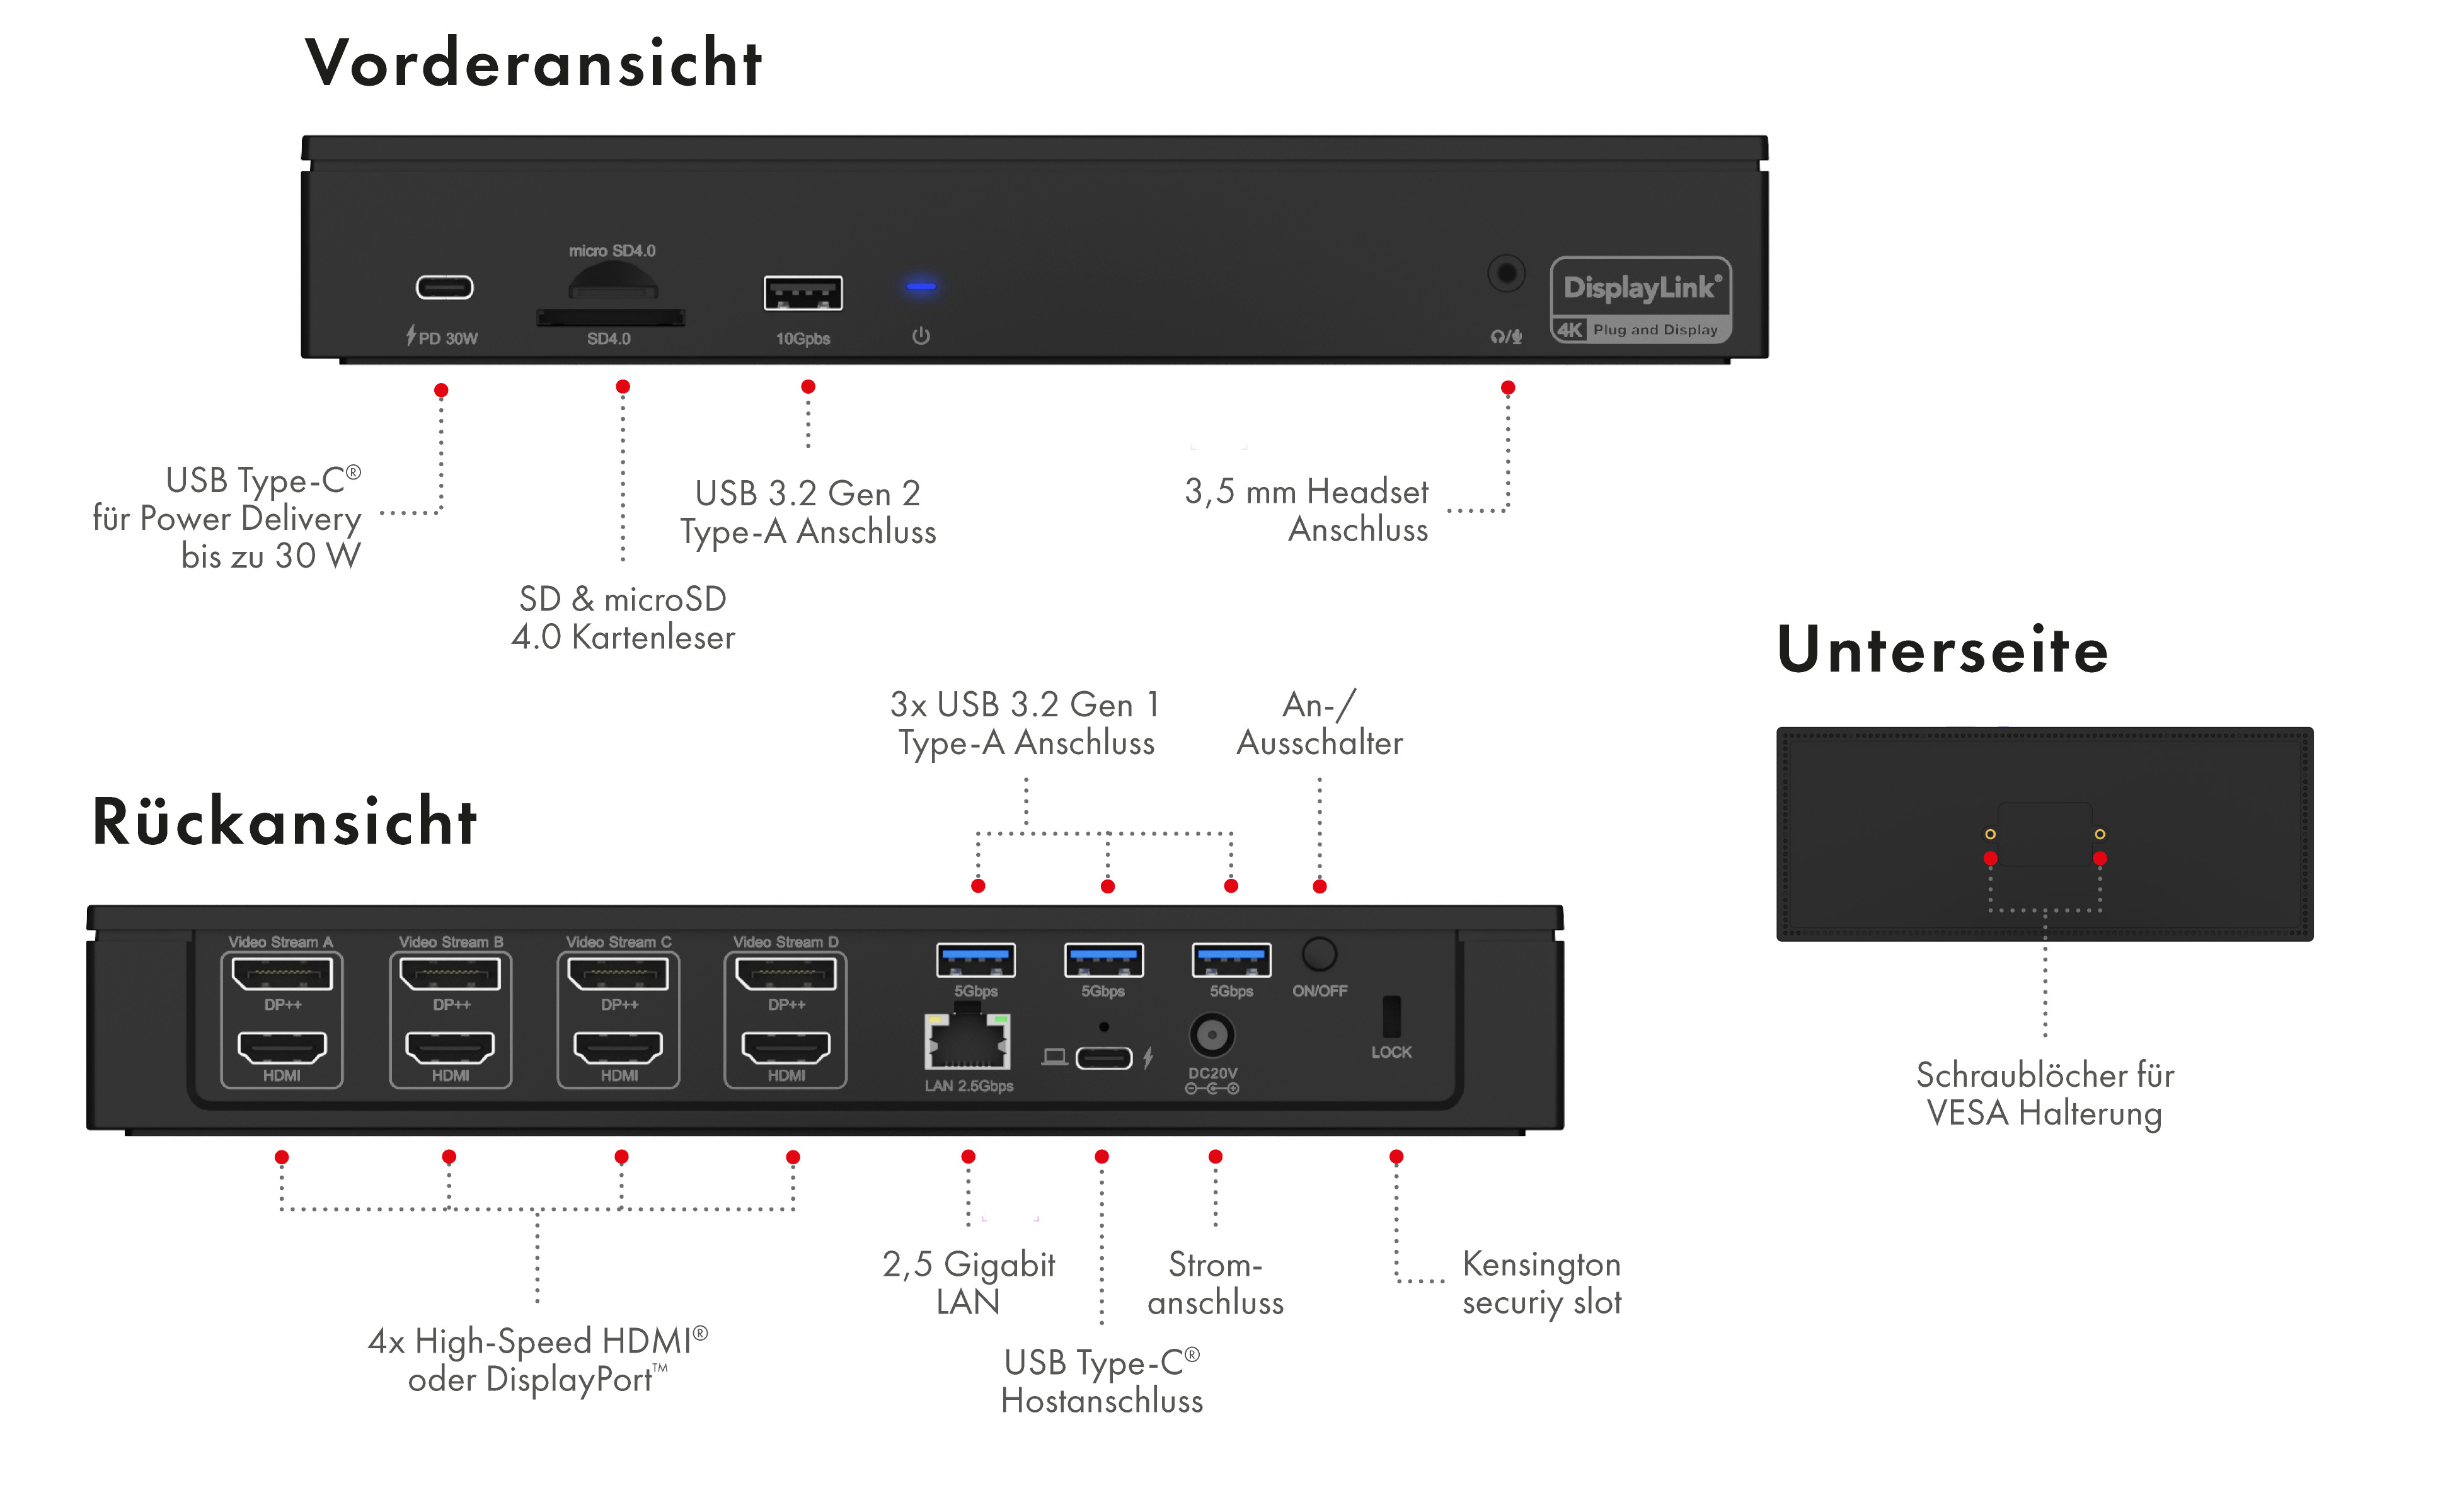 ICY BOX DisplayLink DockingStation blk IB-DK2288AC 4x HDMI+DP,3x USB 3.2, 2.5GLAN